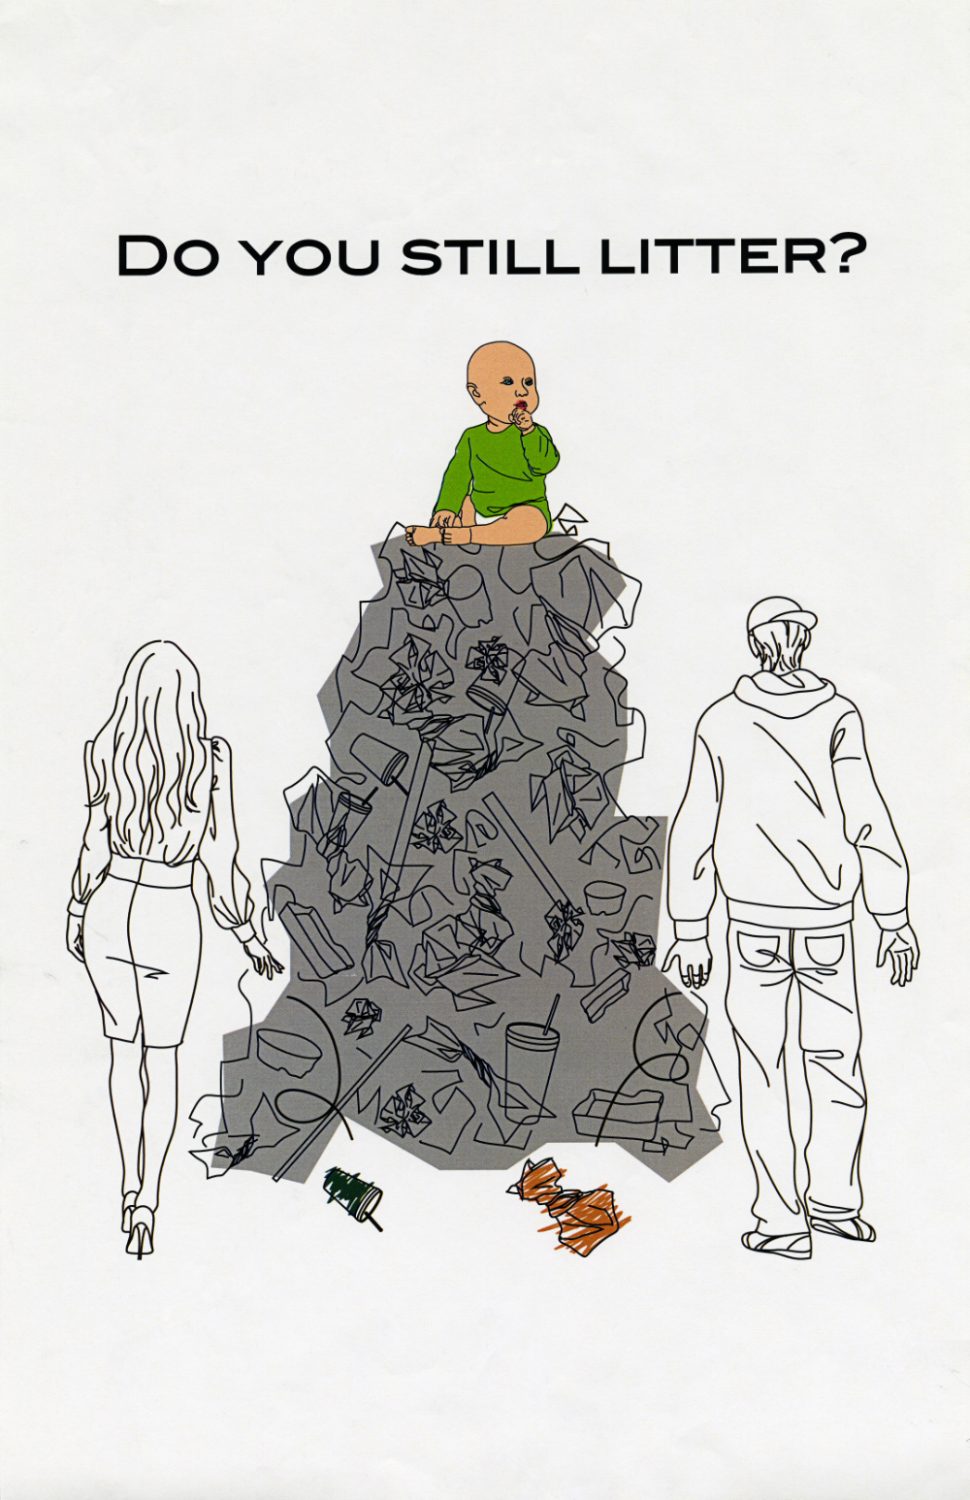 thumbnail of Anti-Litter Poster by Sawako Omura. medium: illustration. date: 2011. dimensions: 11 x 17 inches